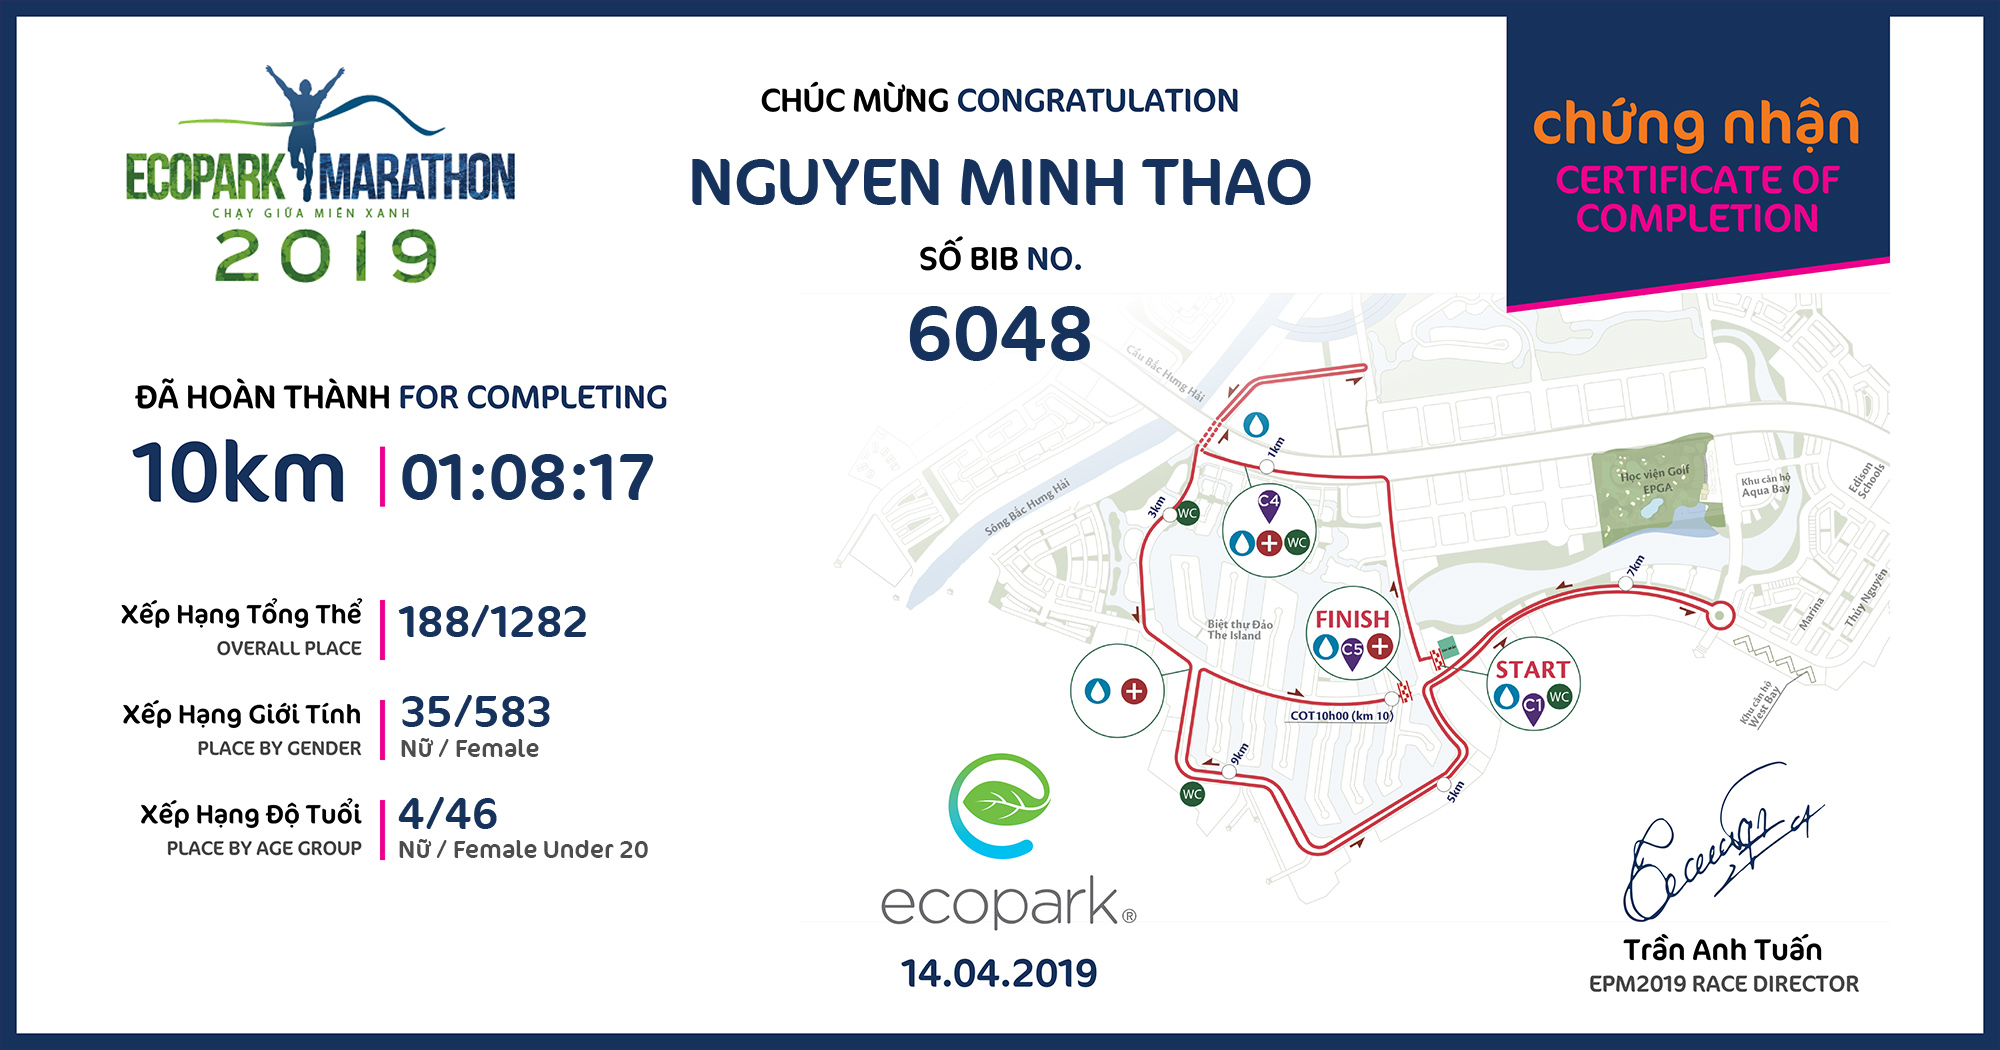 6048 - Nguyen Minh Thao